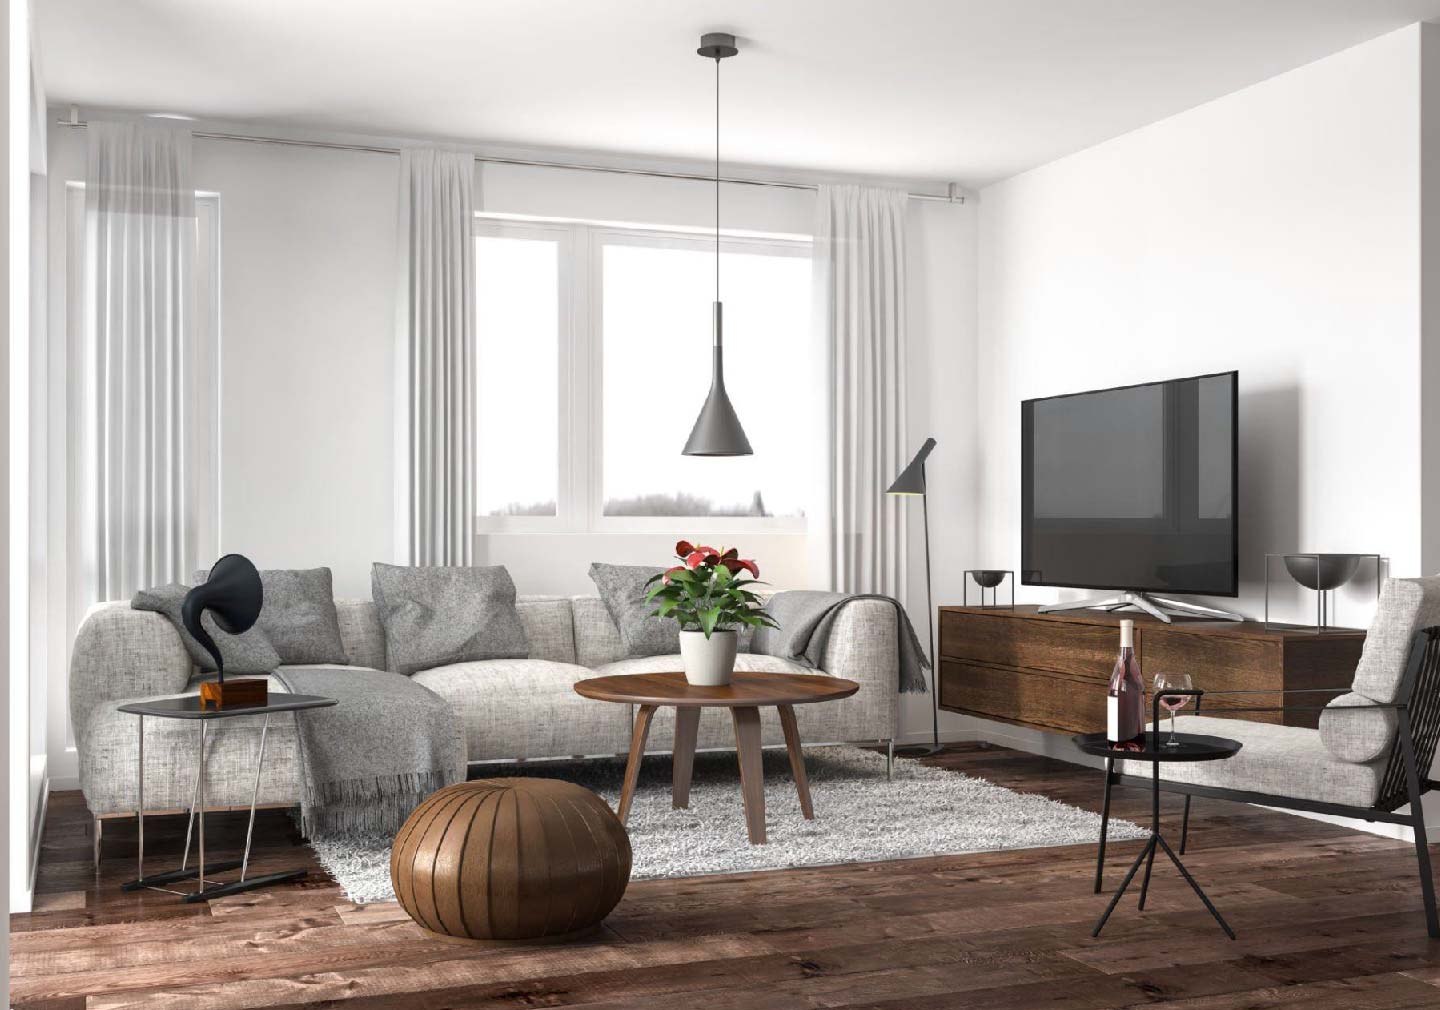 best minimalist interior design ideas - living room with cozy sofa and wooden flooring